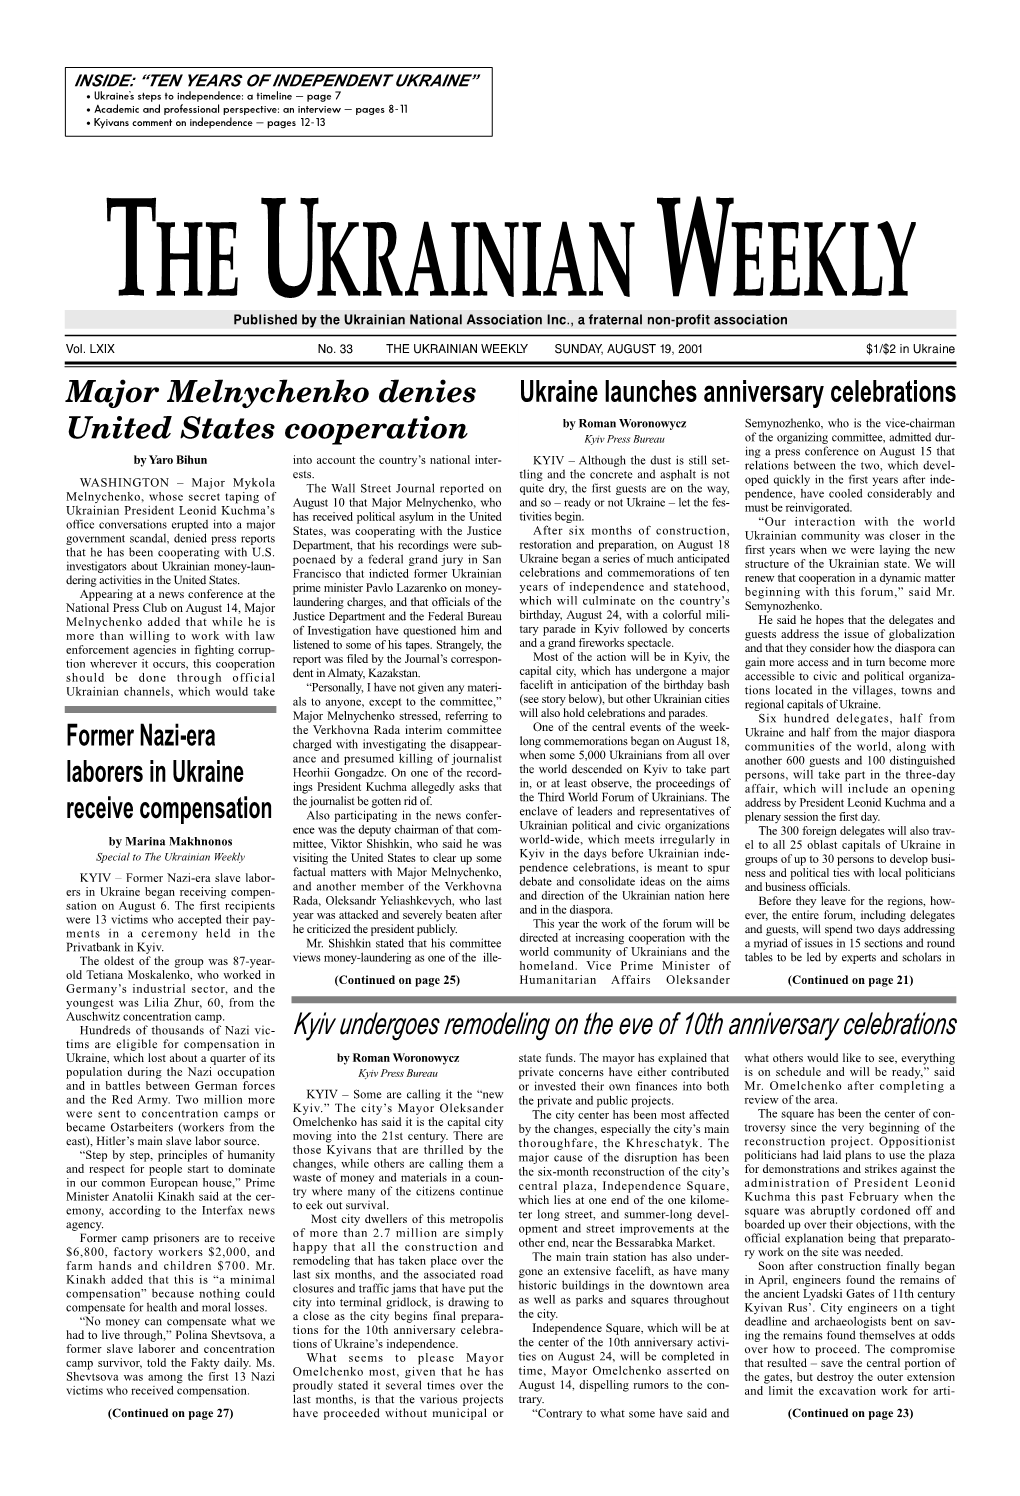 The Ukrainian Weekly 2001, No.33